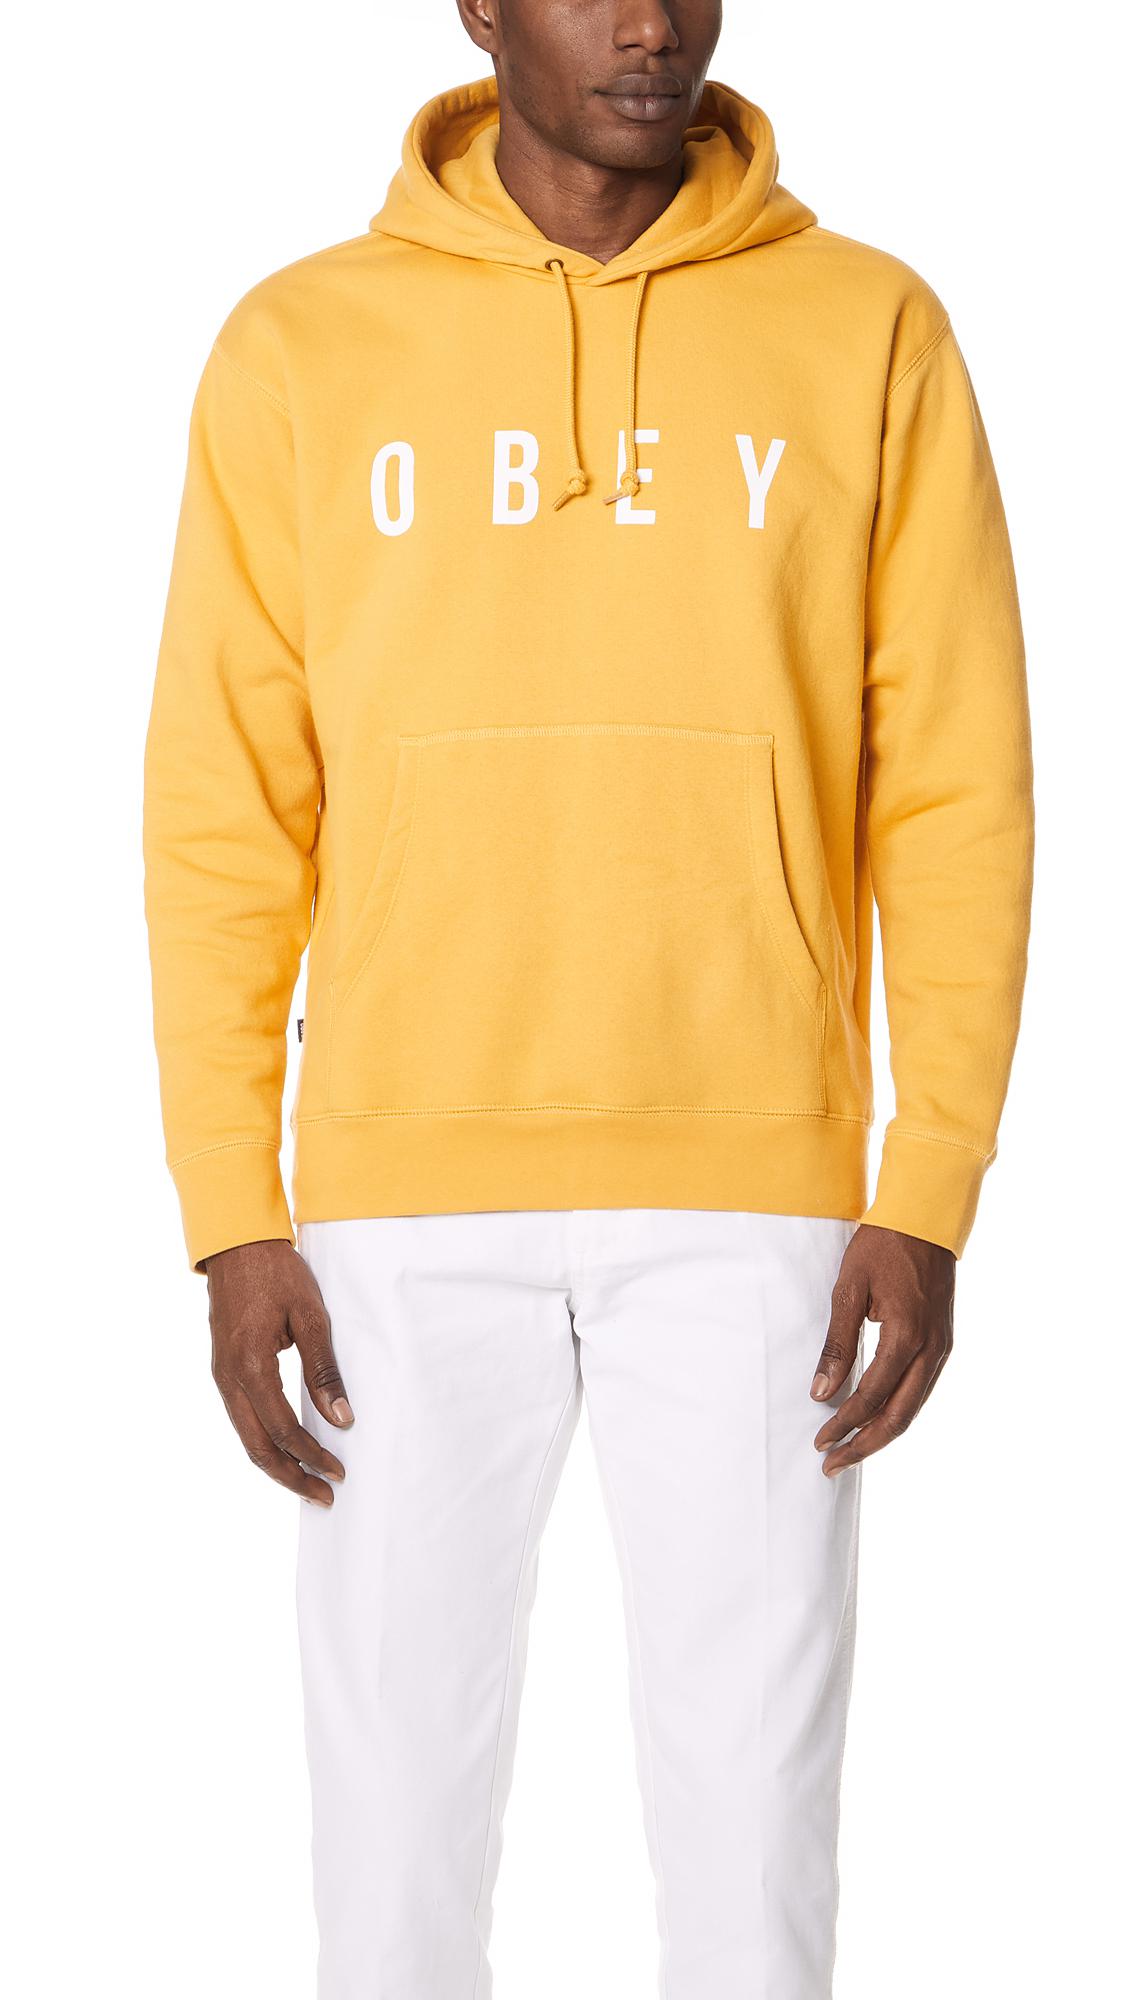 obey anyway yellow anorak jacket